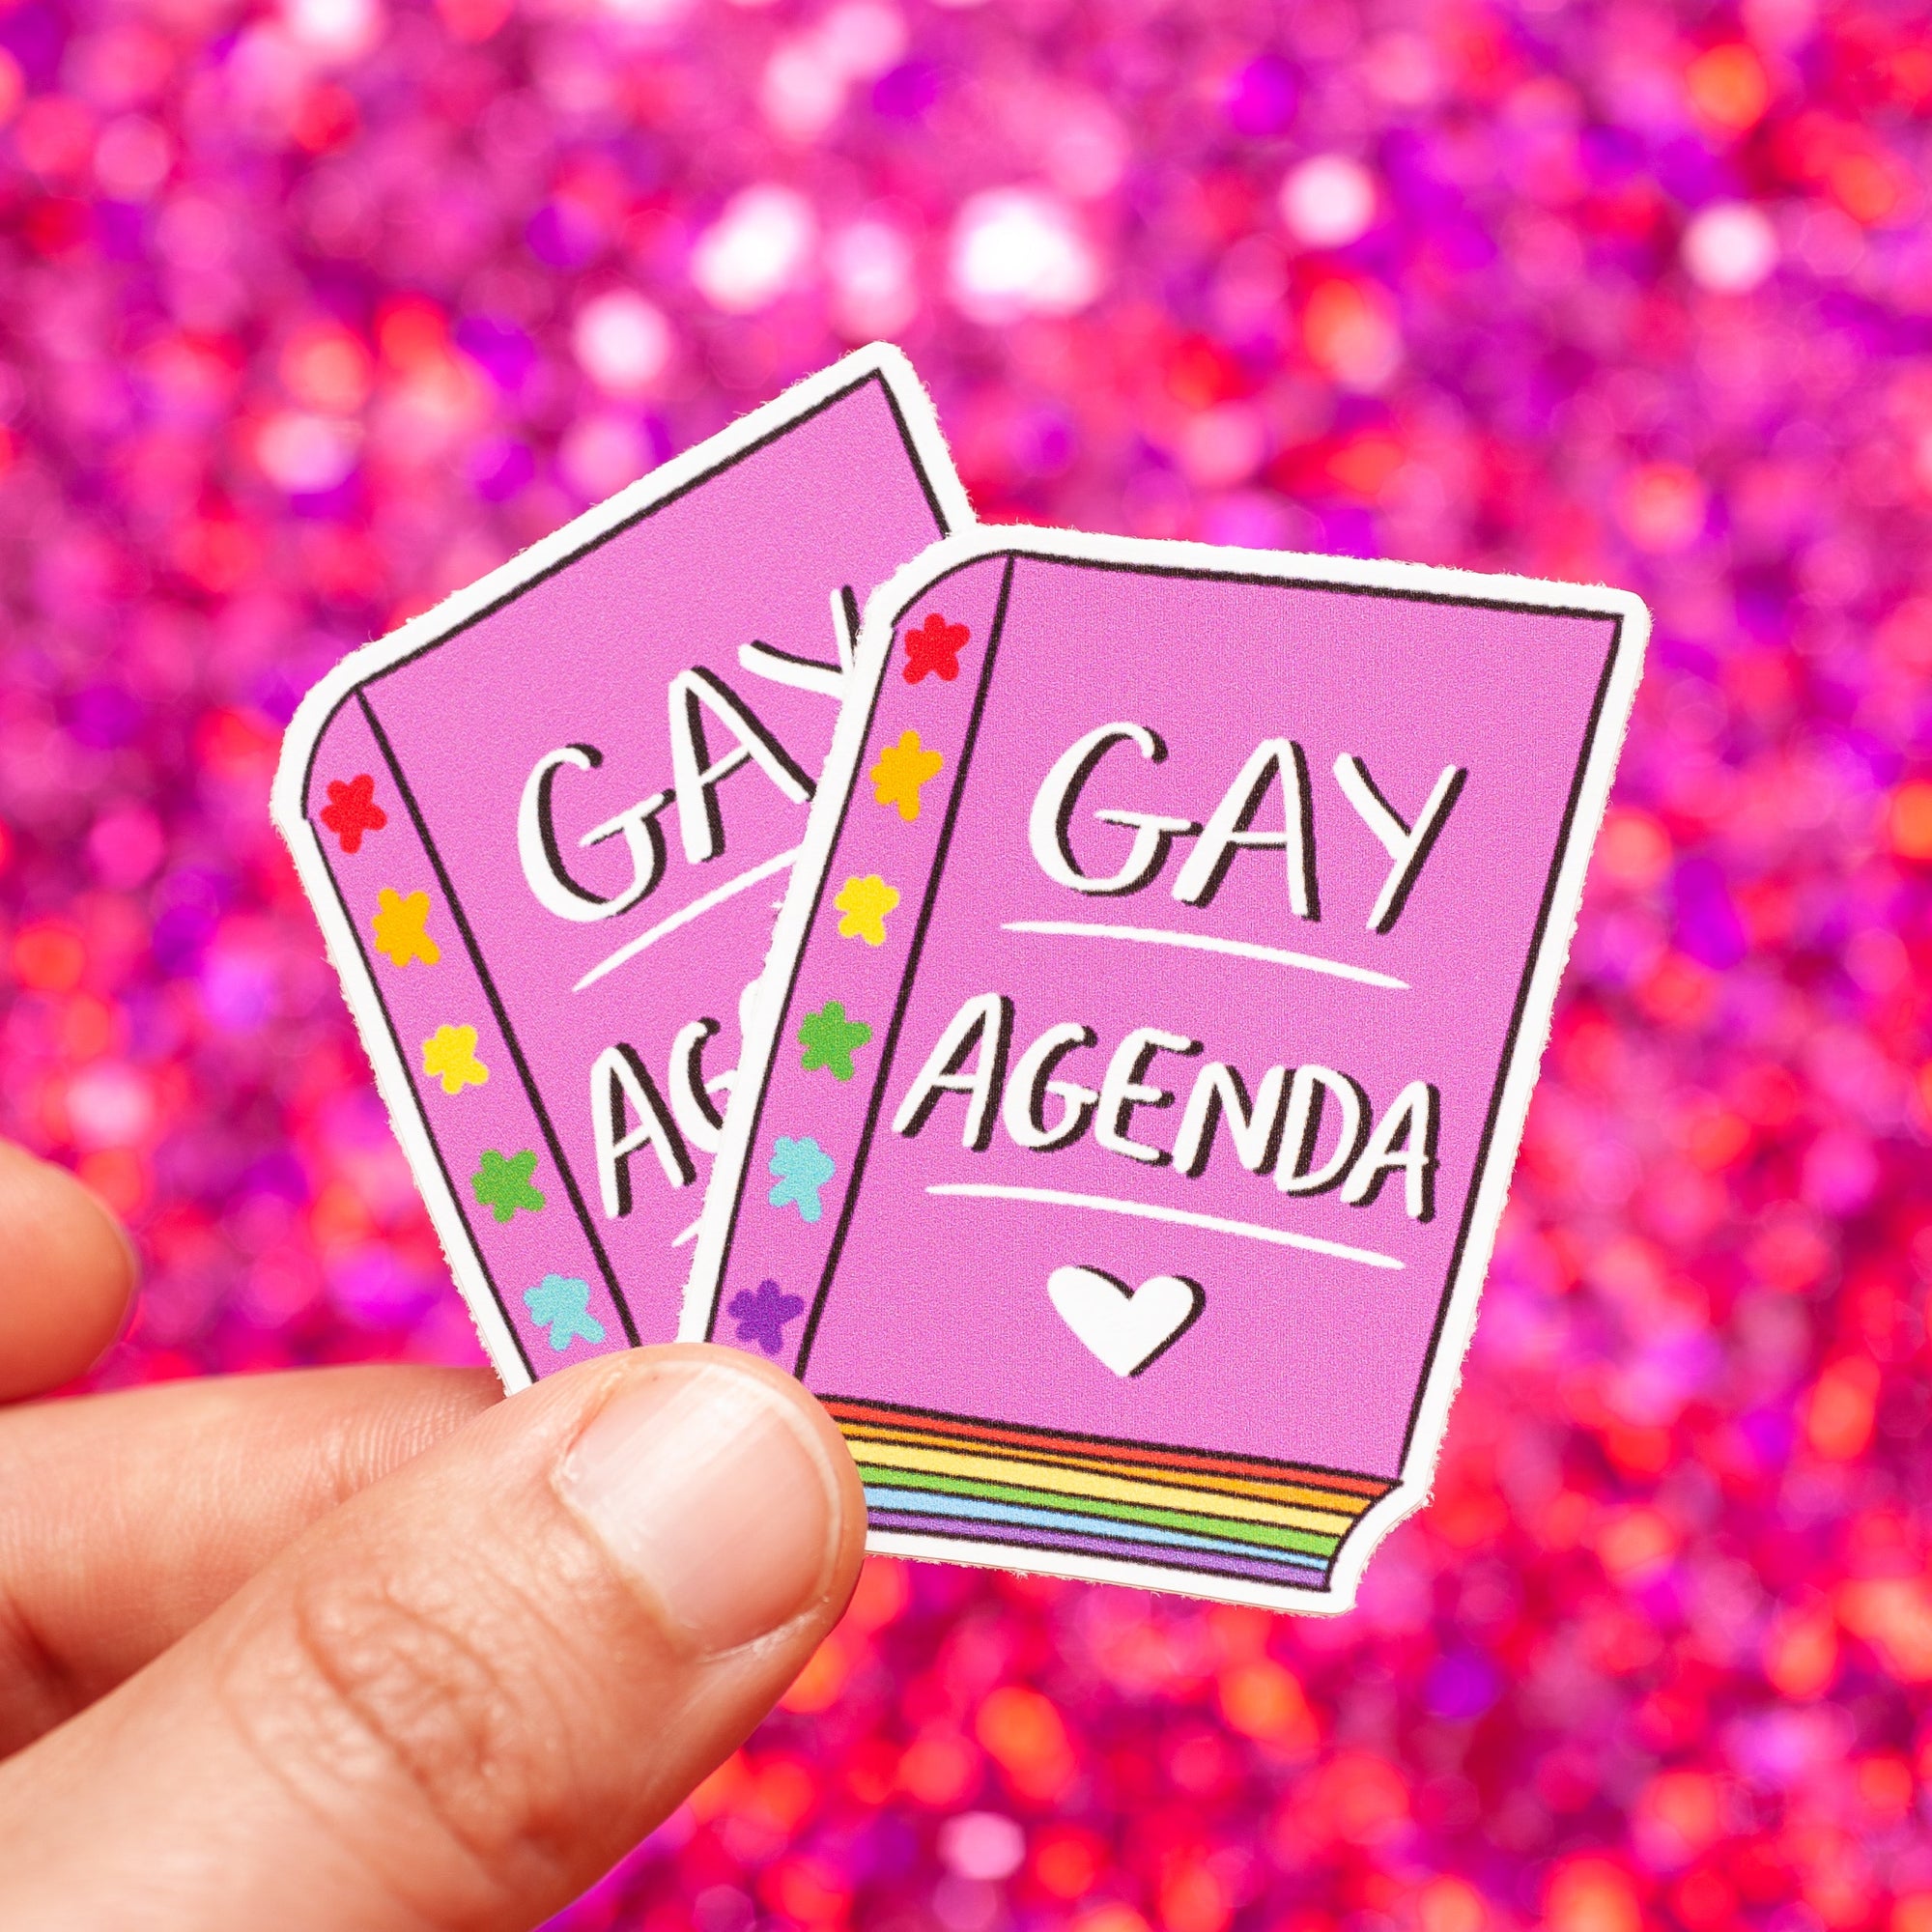 Gay Agenda sticker